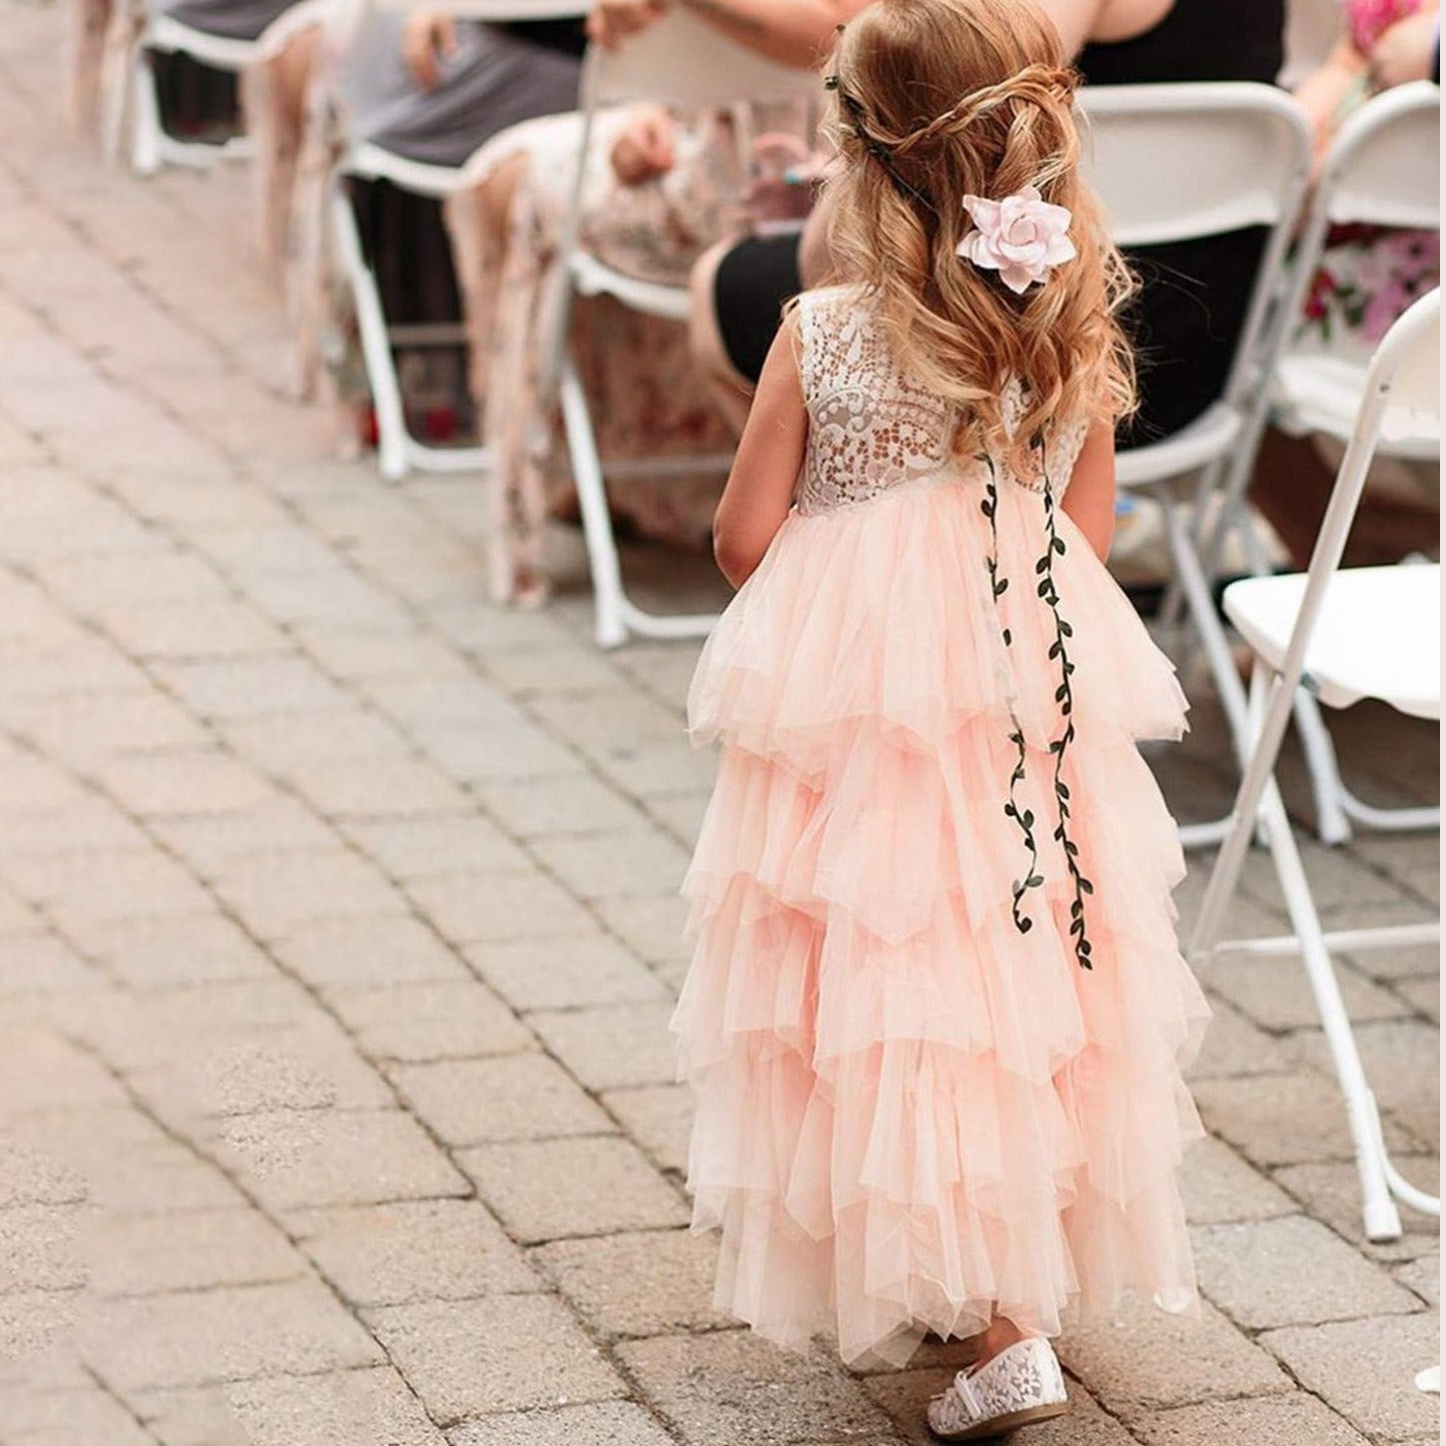 Young girl wearing blush coloured flower girl dress